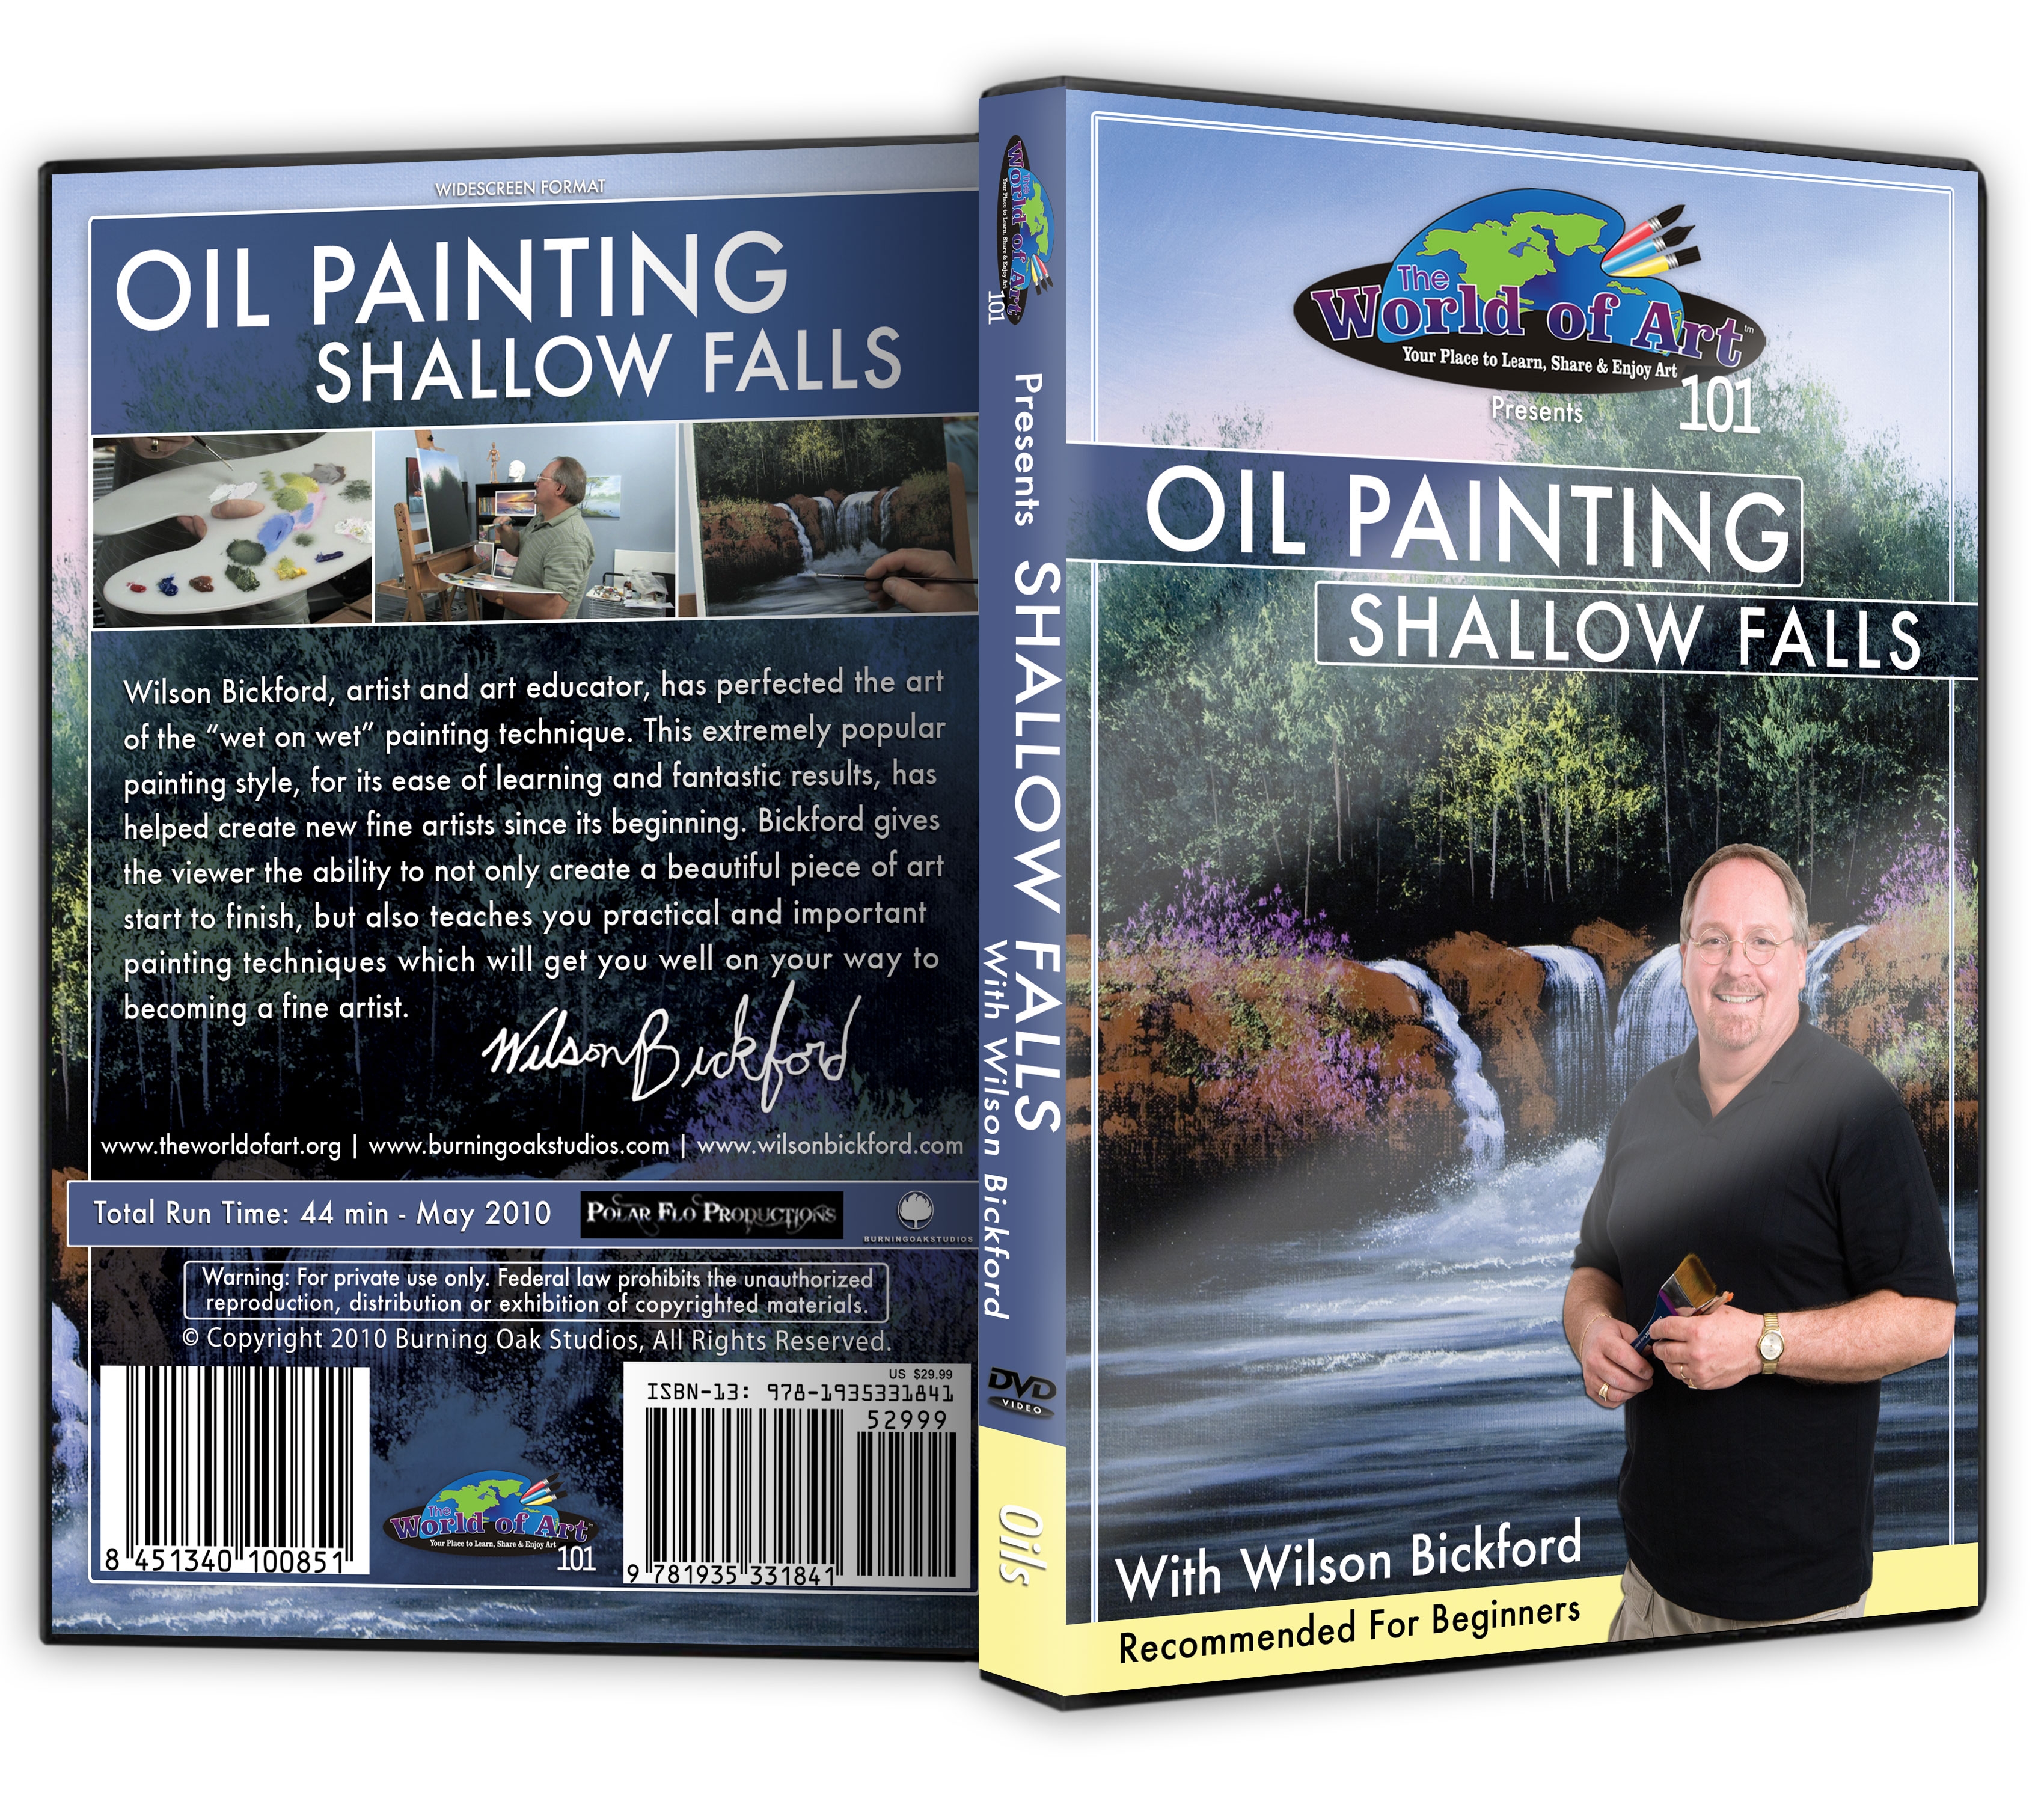 Wilson Bickford Shallow Falls DVD Cover